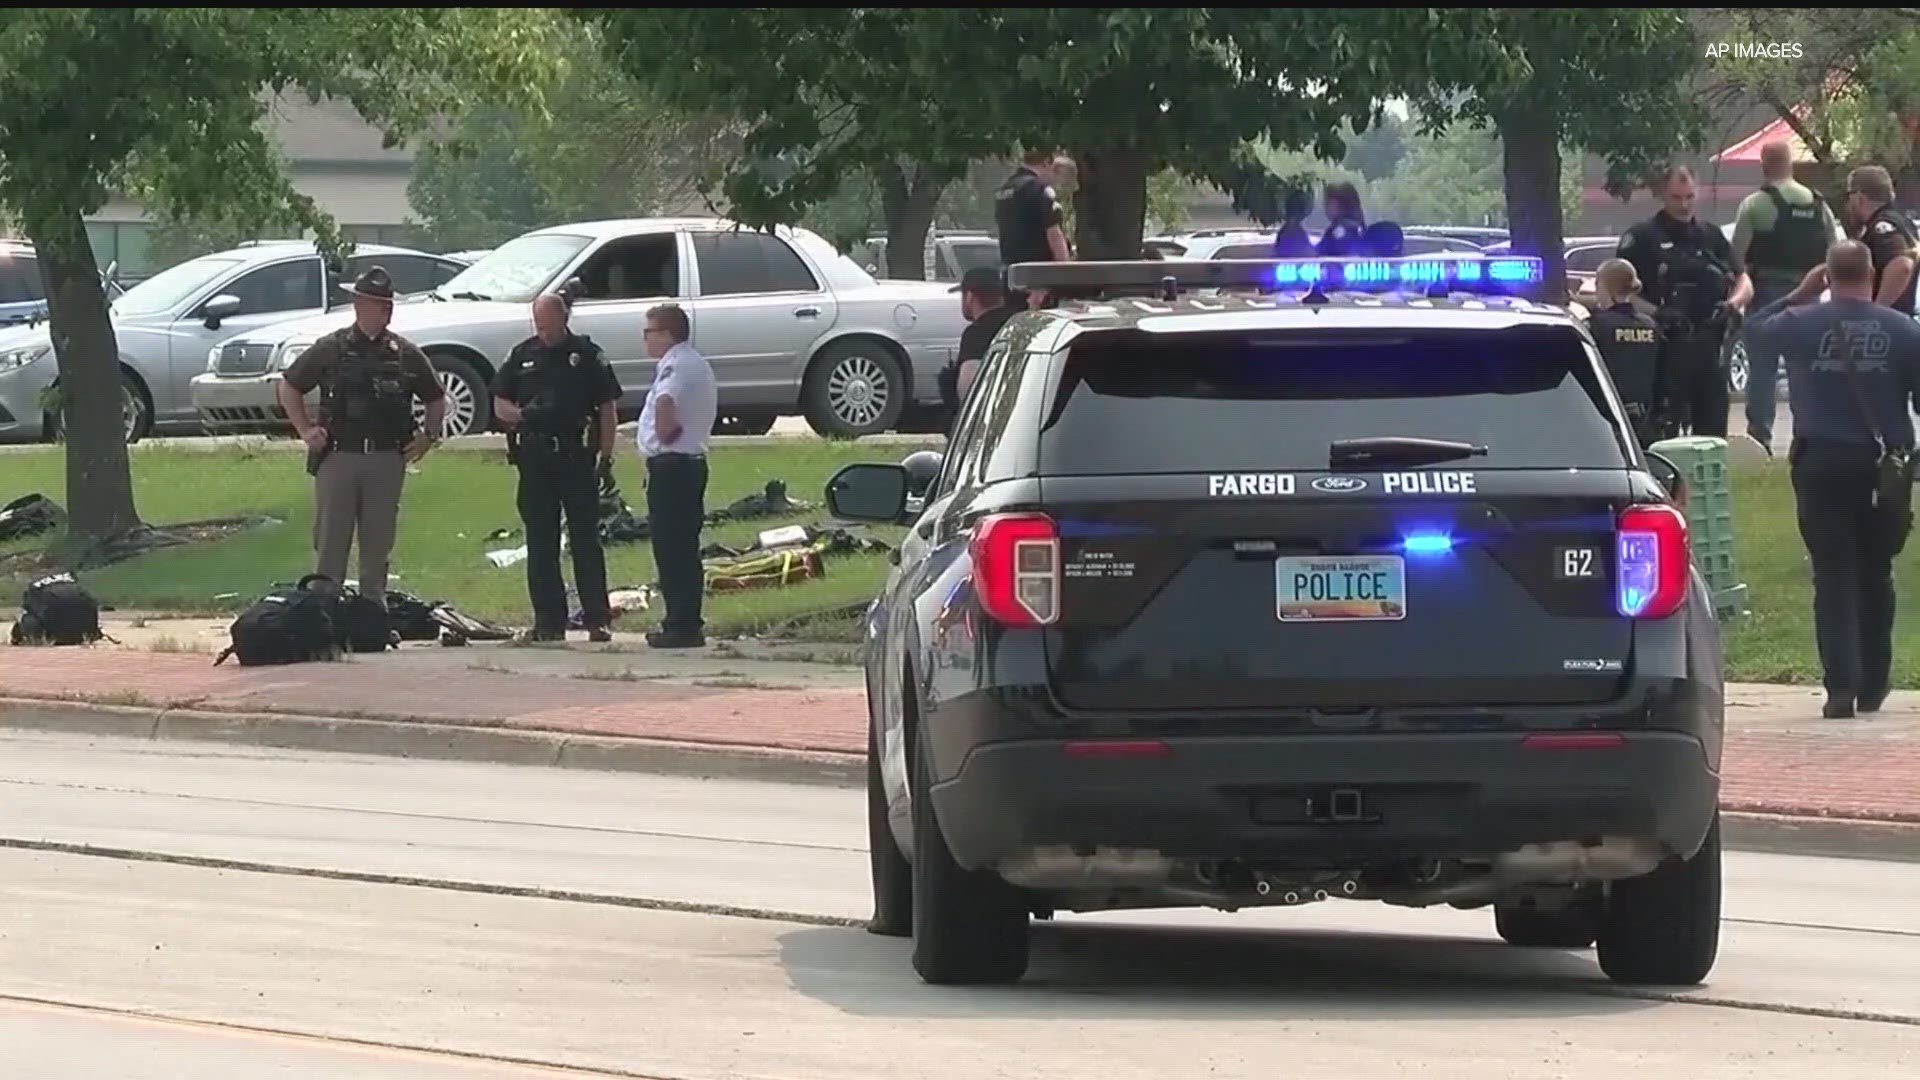 Fargo's police chief has said the suspect's motive was unclear. North Dakota's Bureau of Criminal Investigation and the FBI are investigating.